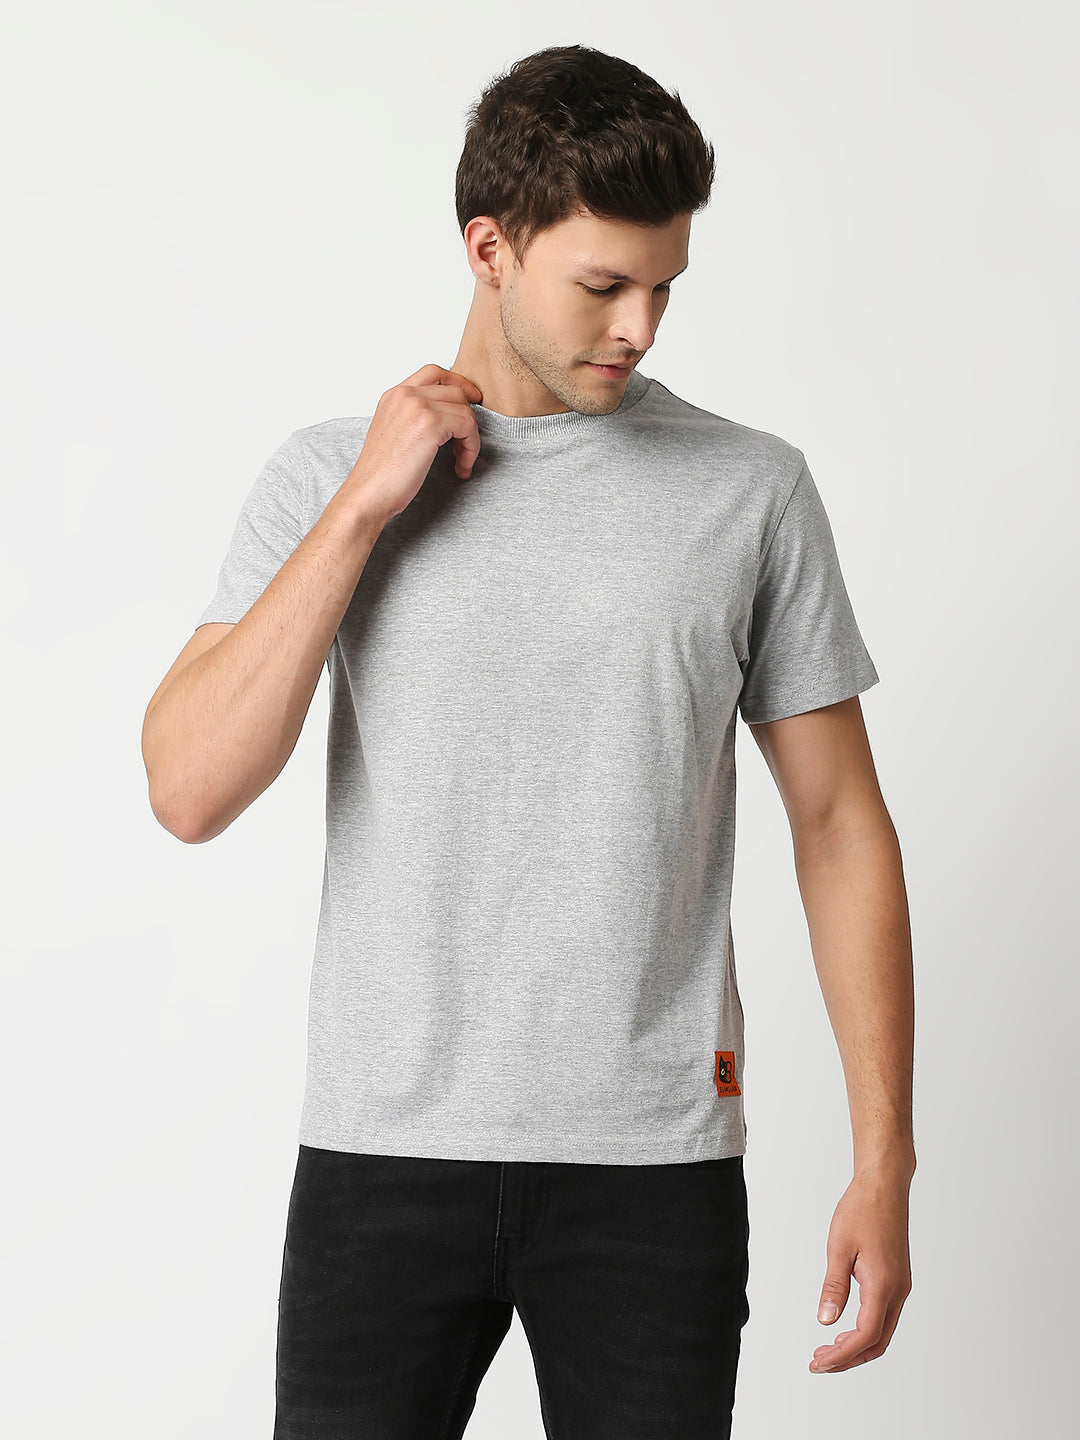 Buy Blamblack Men's Half Sleeves Grey Melange Plain T Shirt